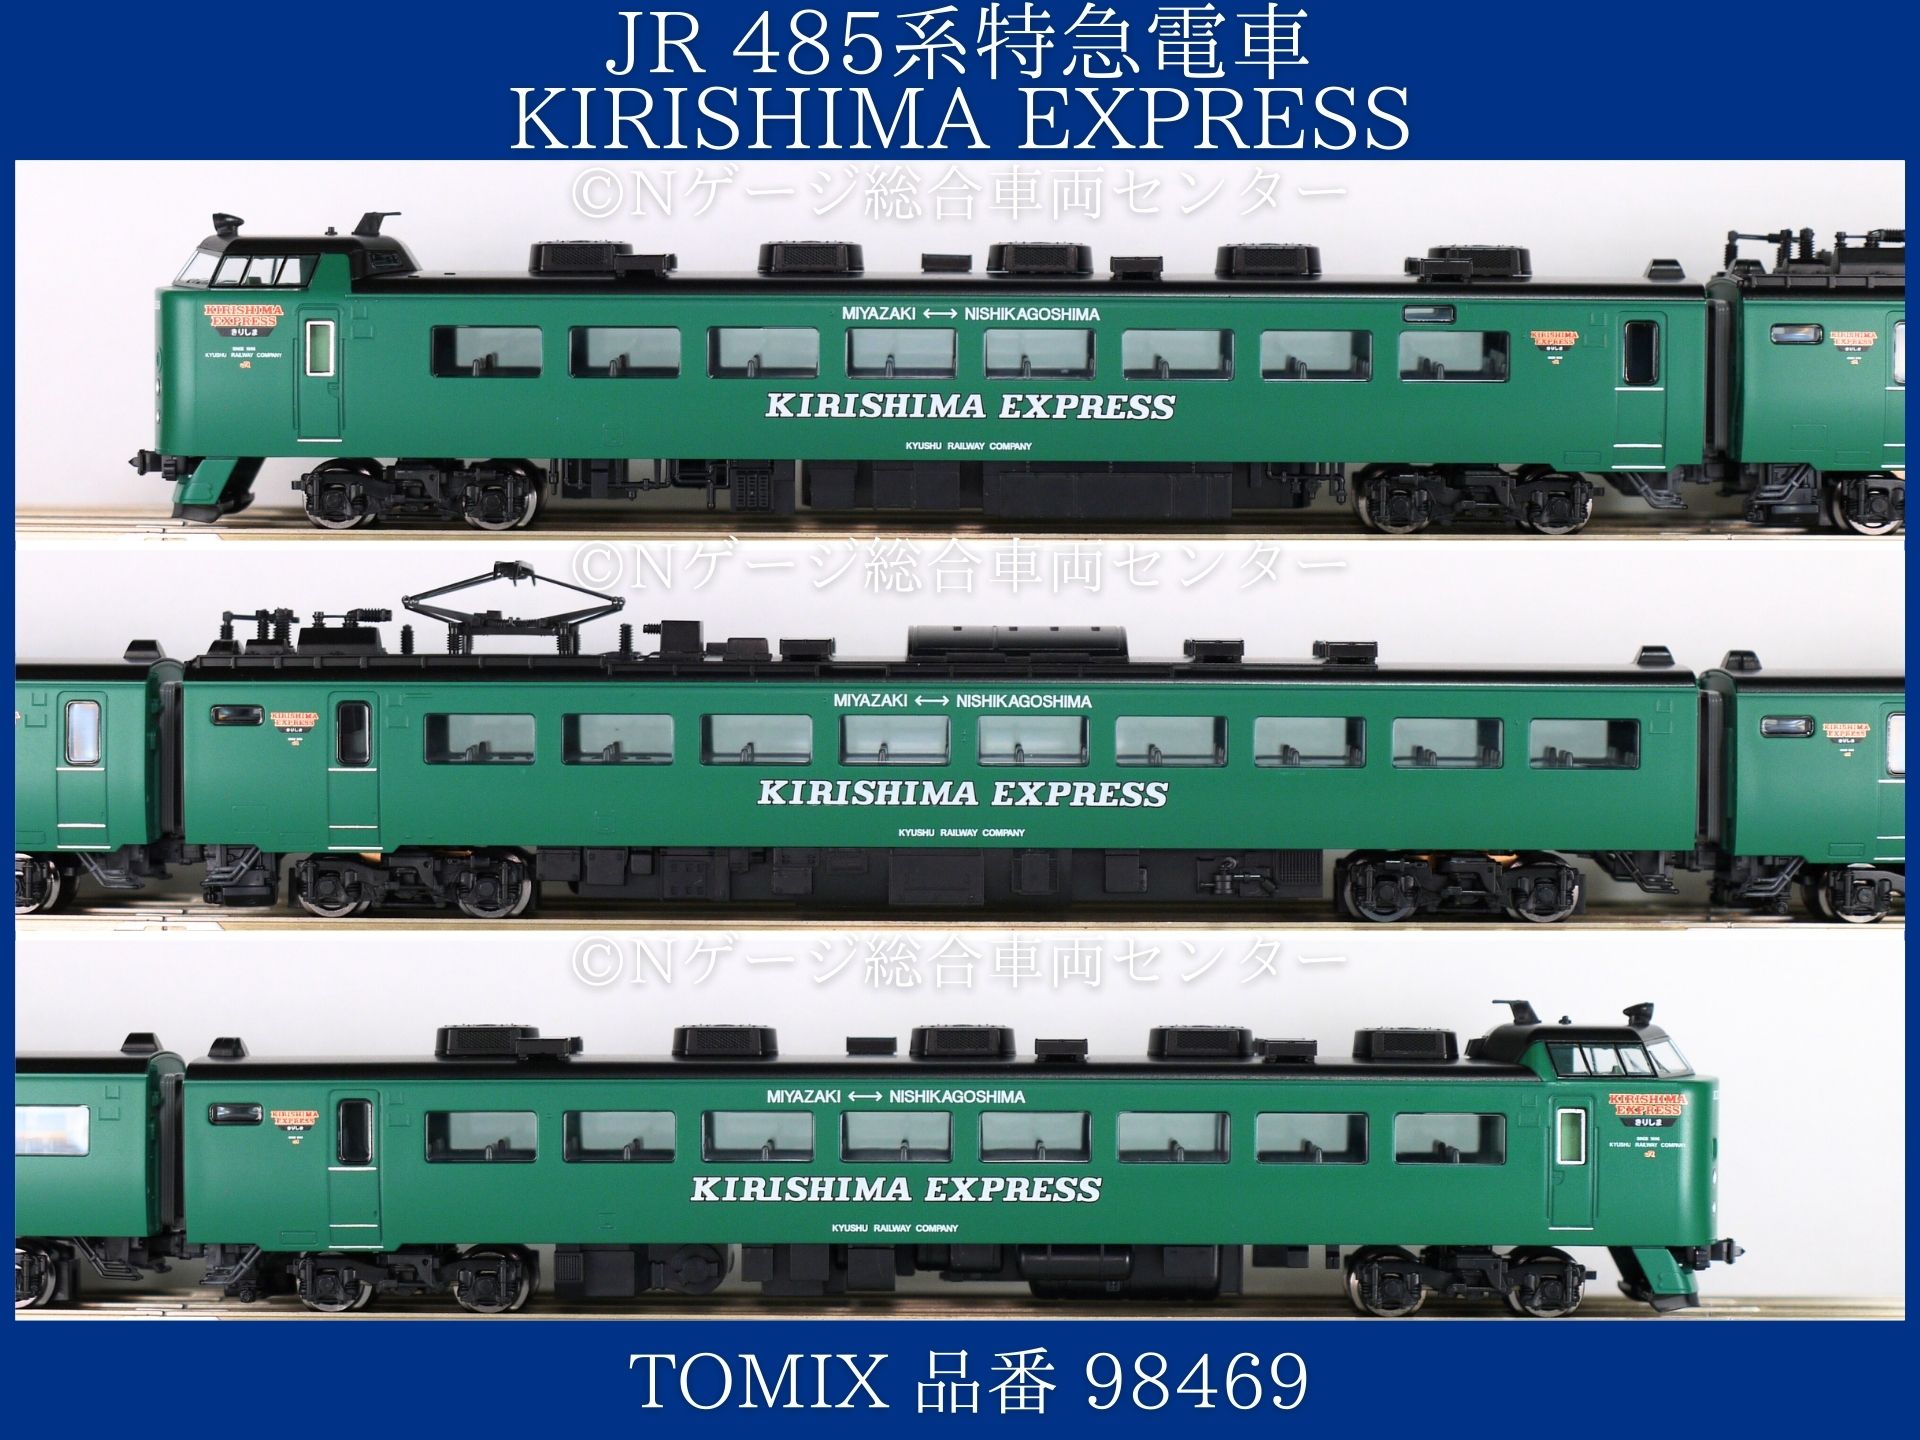 福袋セール】 TOMIX 98469 JR 485系(KIRISHIMA EXPRESS) 鉄道模型